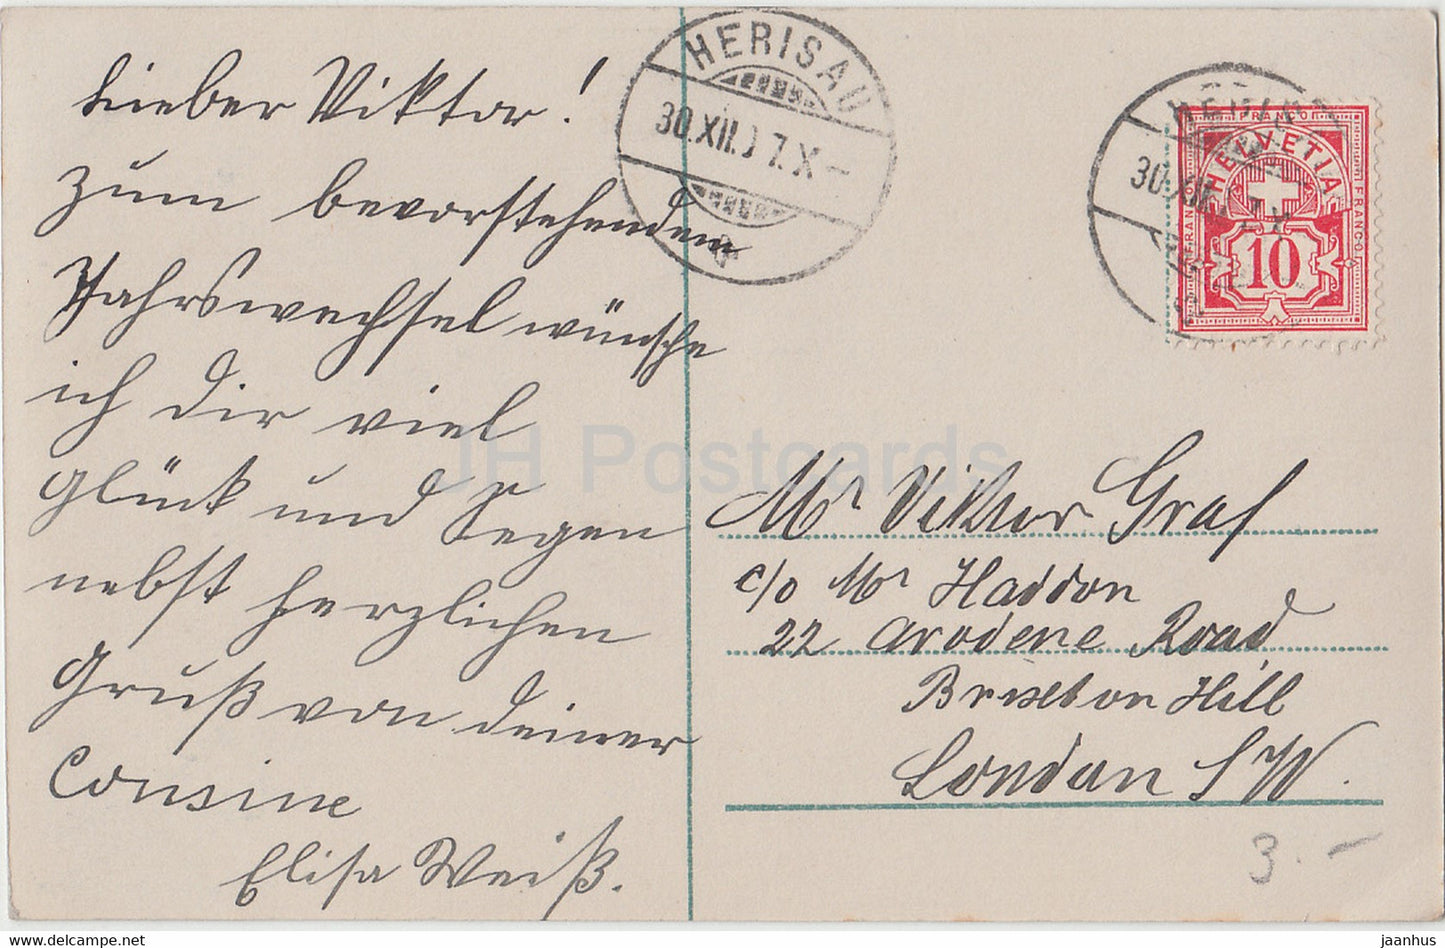 Carte de vœux du Nouvel An - Herzlichen Gluckwunsch zum Neuen Jahre - traîneau à chevaux - carte postale ancienne - 1907 - Allemagne - utilisé